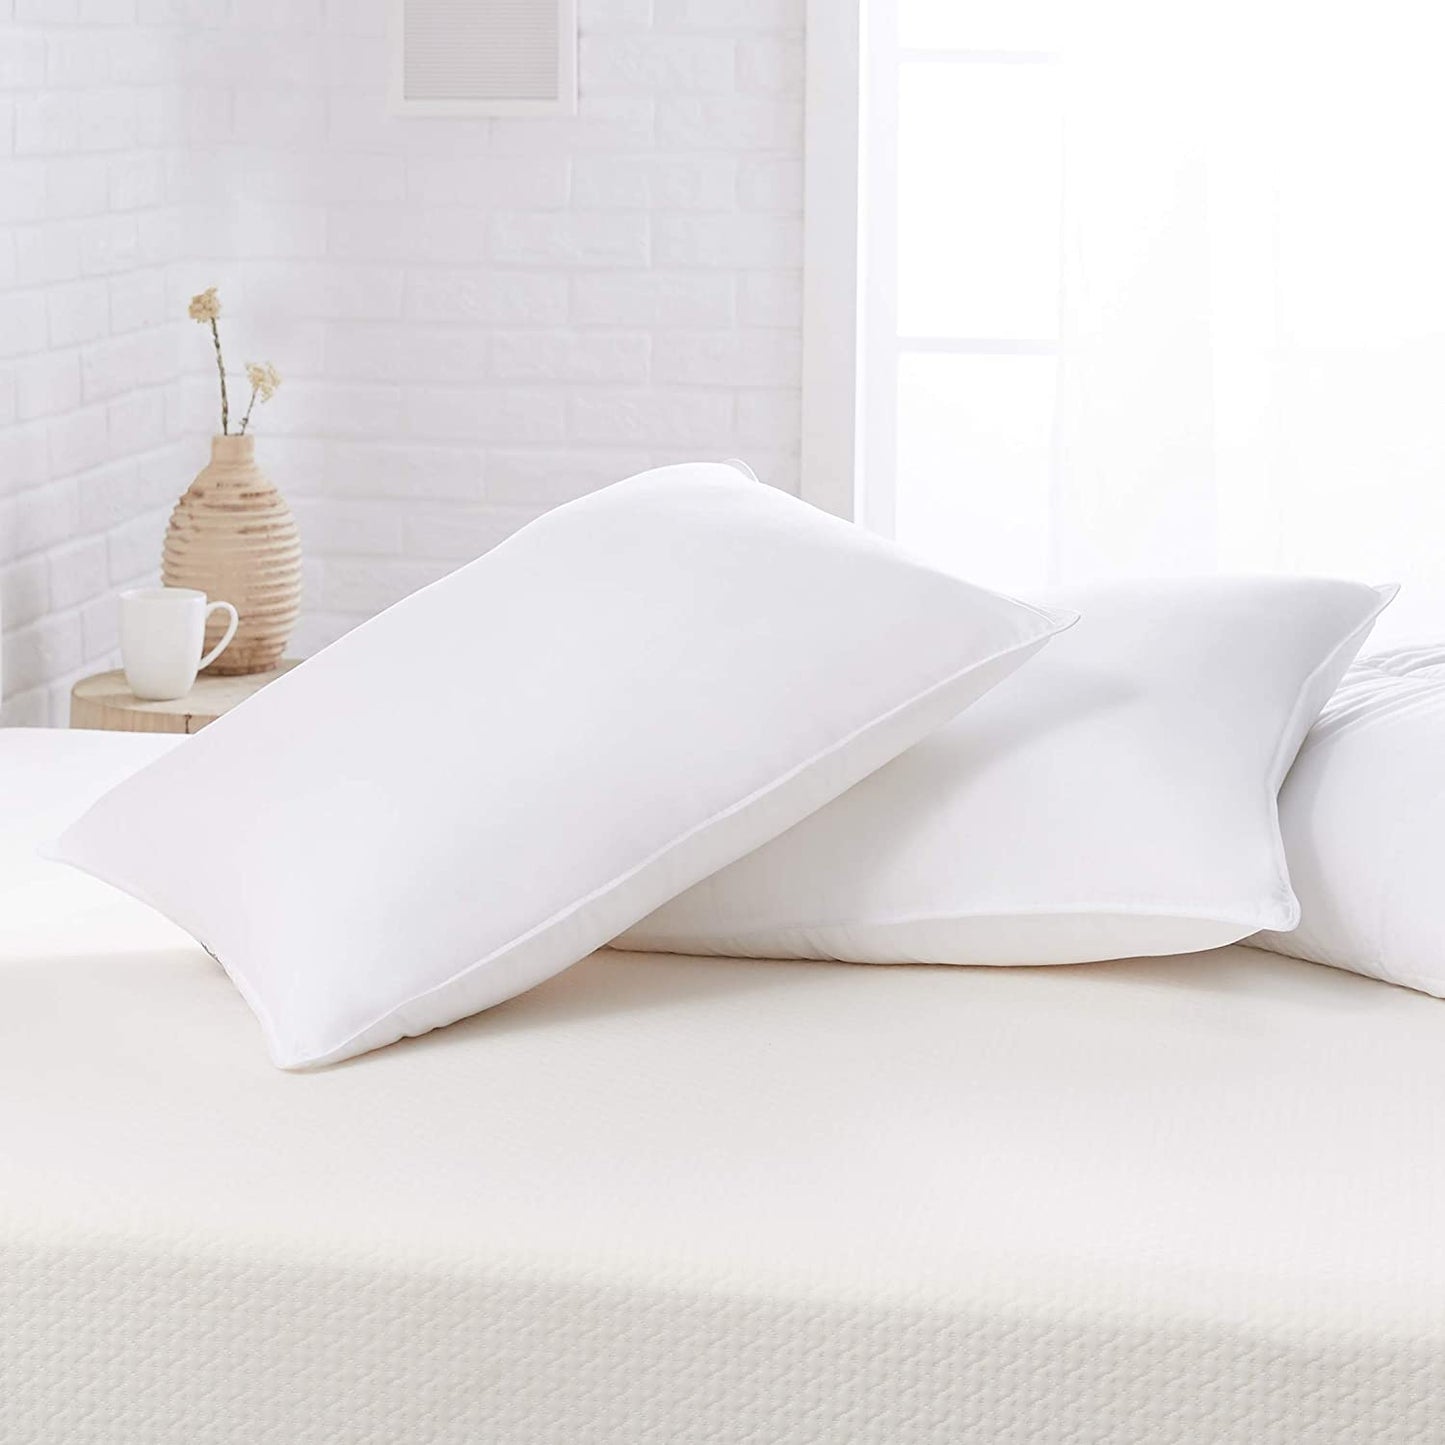 Down Alternative Bed Pillows - Medium Density, Standard, 2-Pack